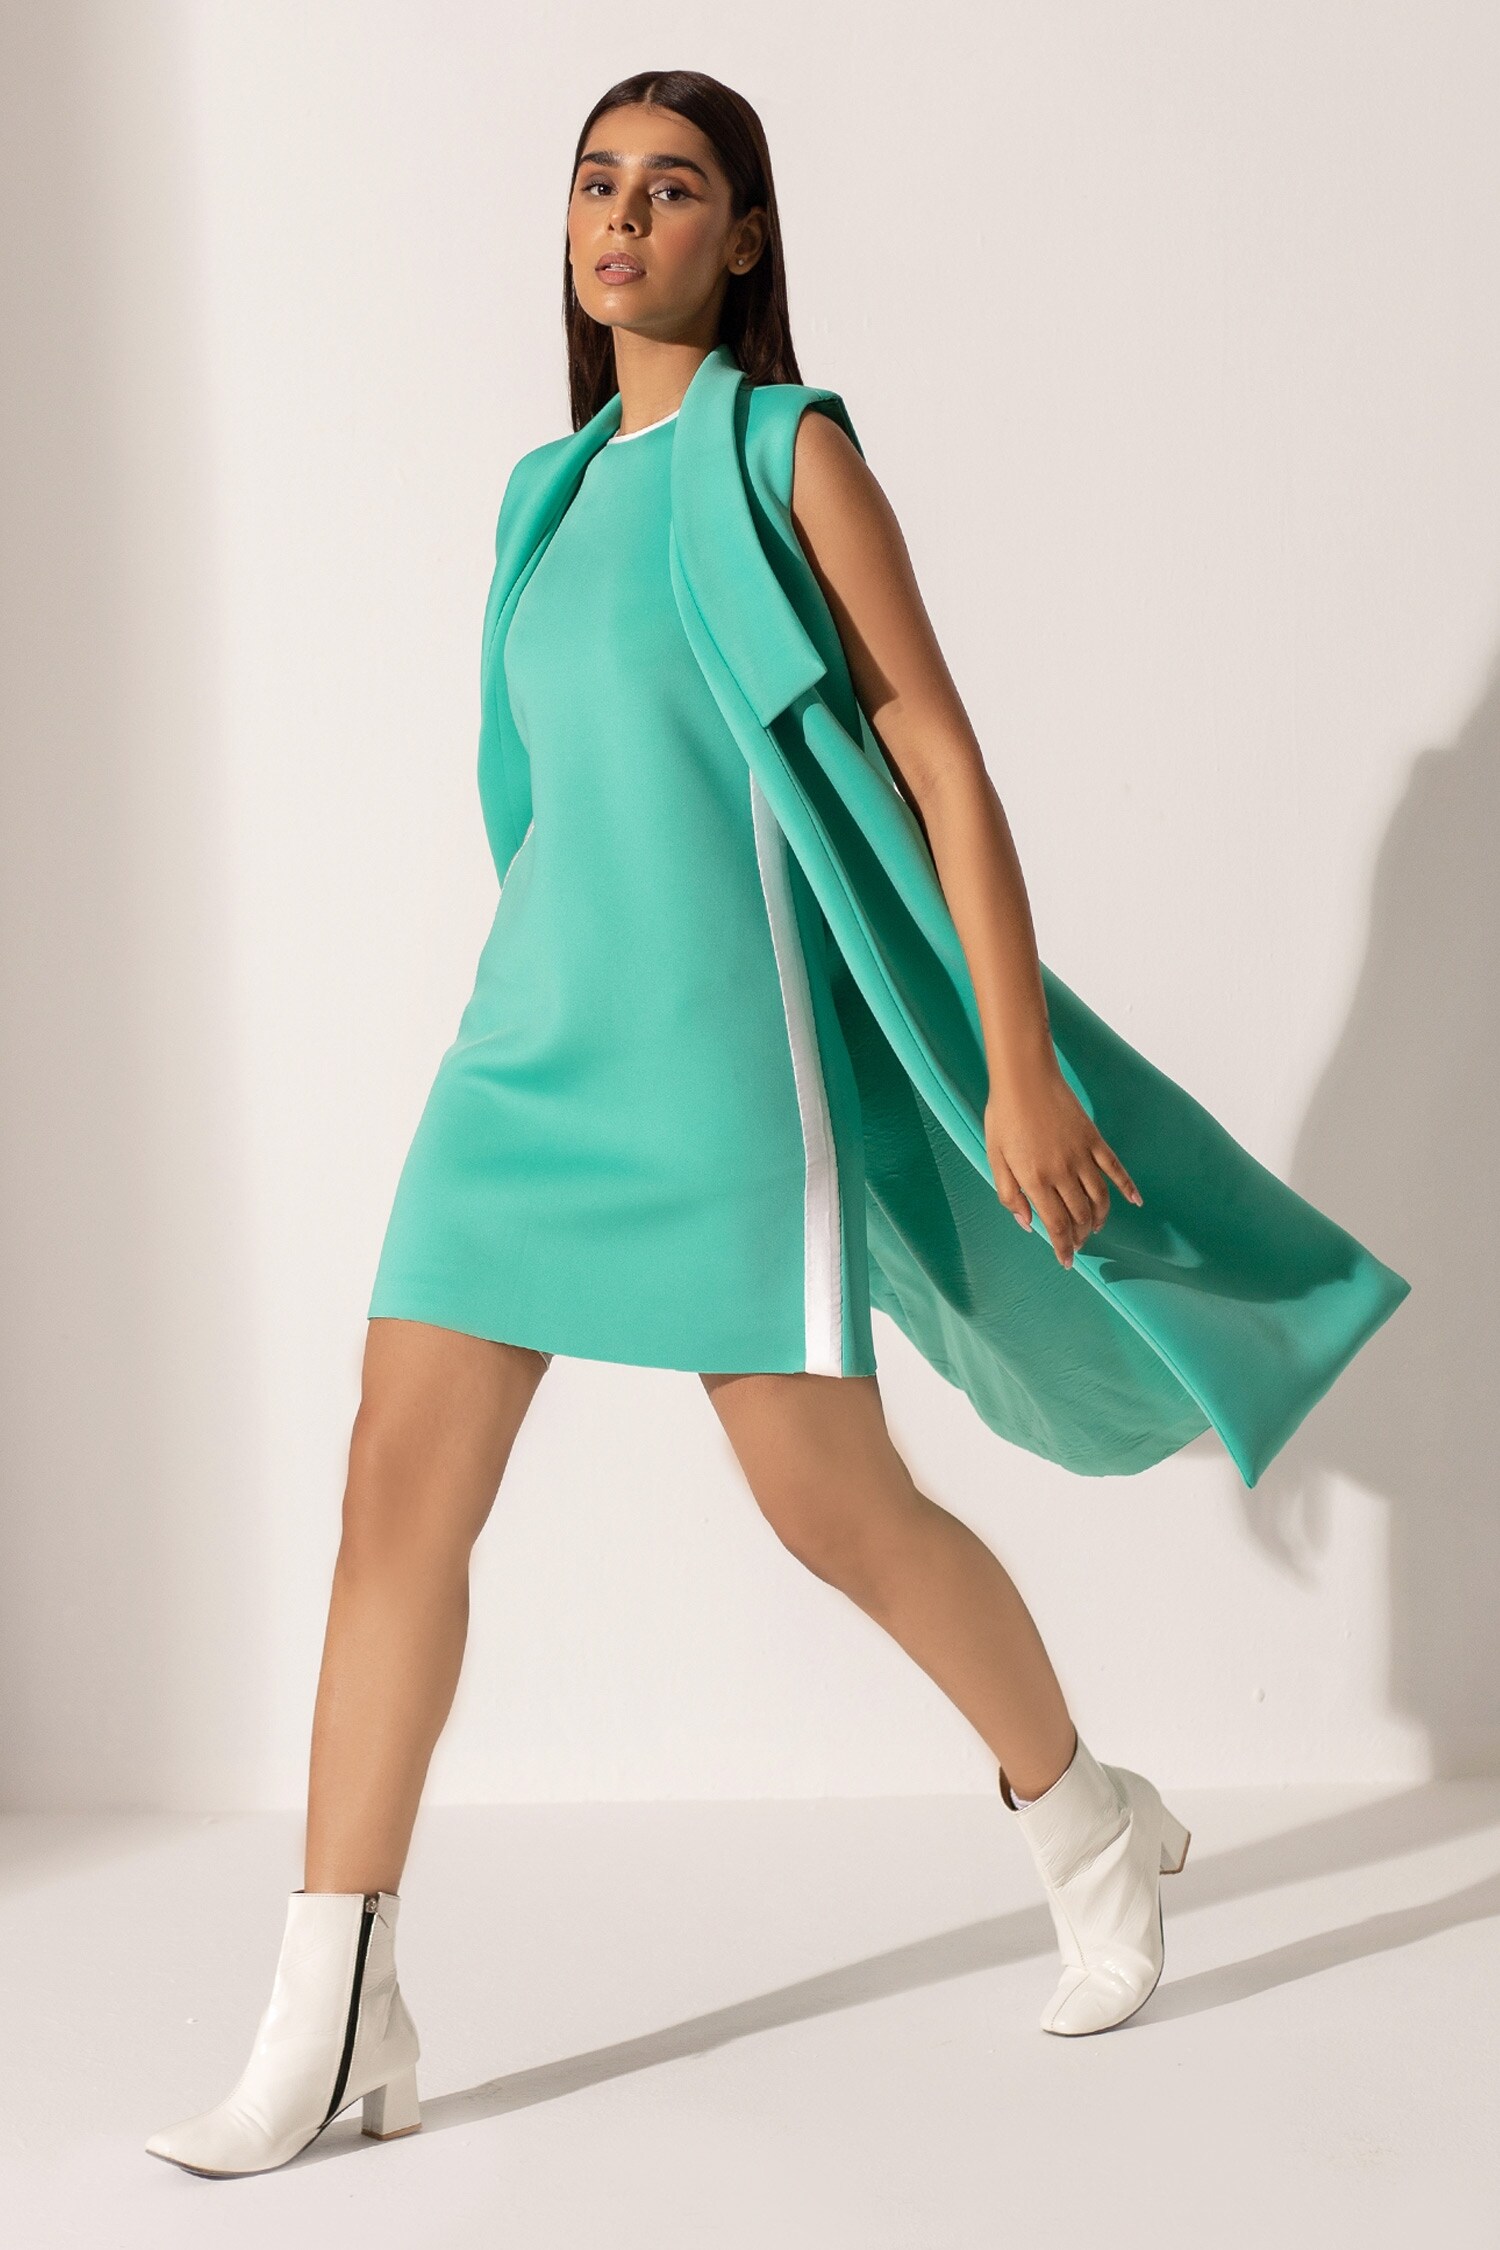 Kritika Madan Label Blue Neoprene Mini Dress With Coat